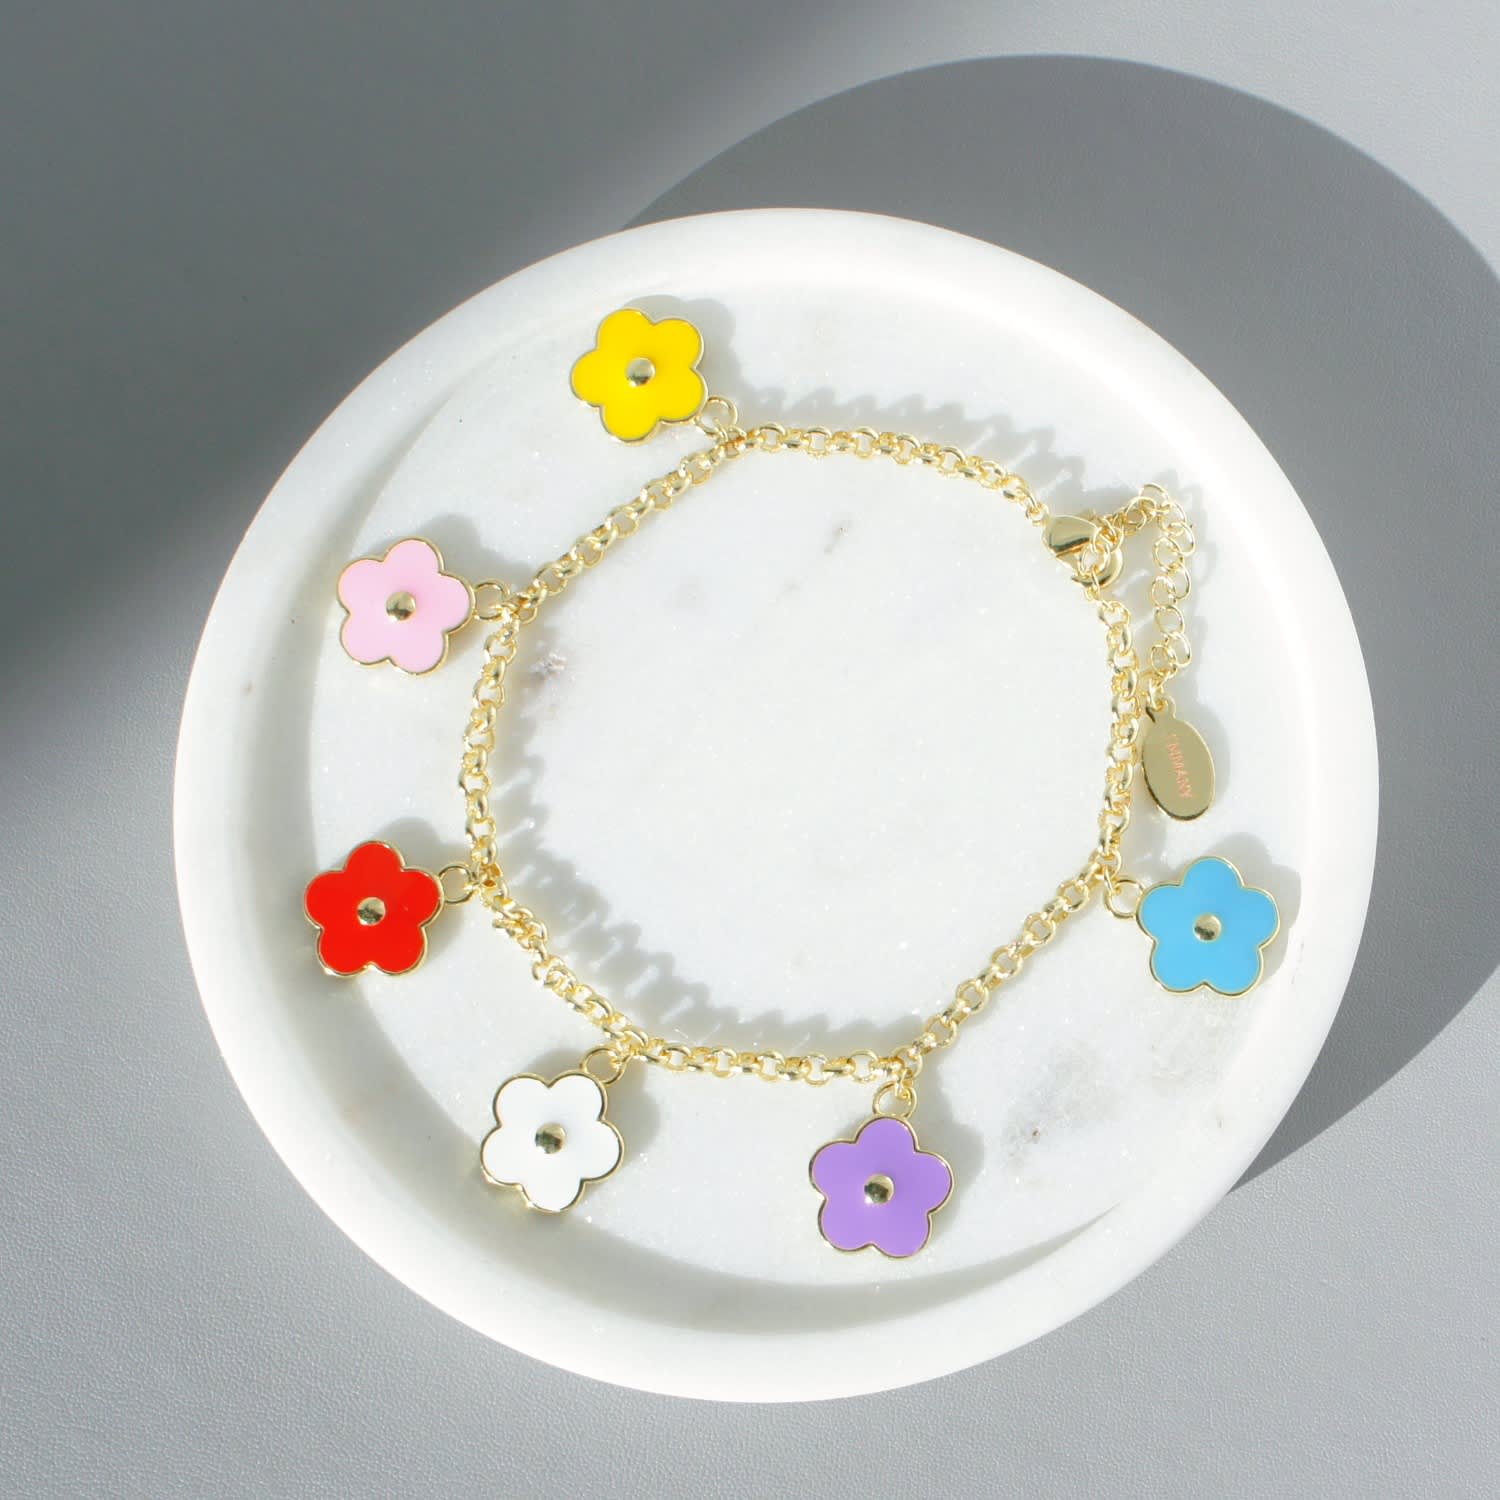 I'mmany London Women's Flower Power Chain Necklace